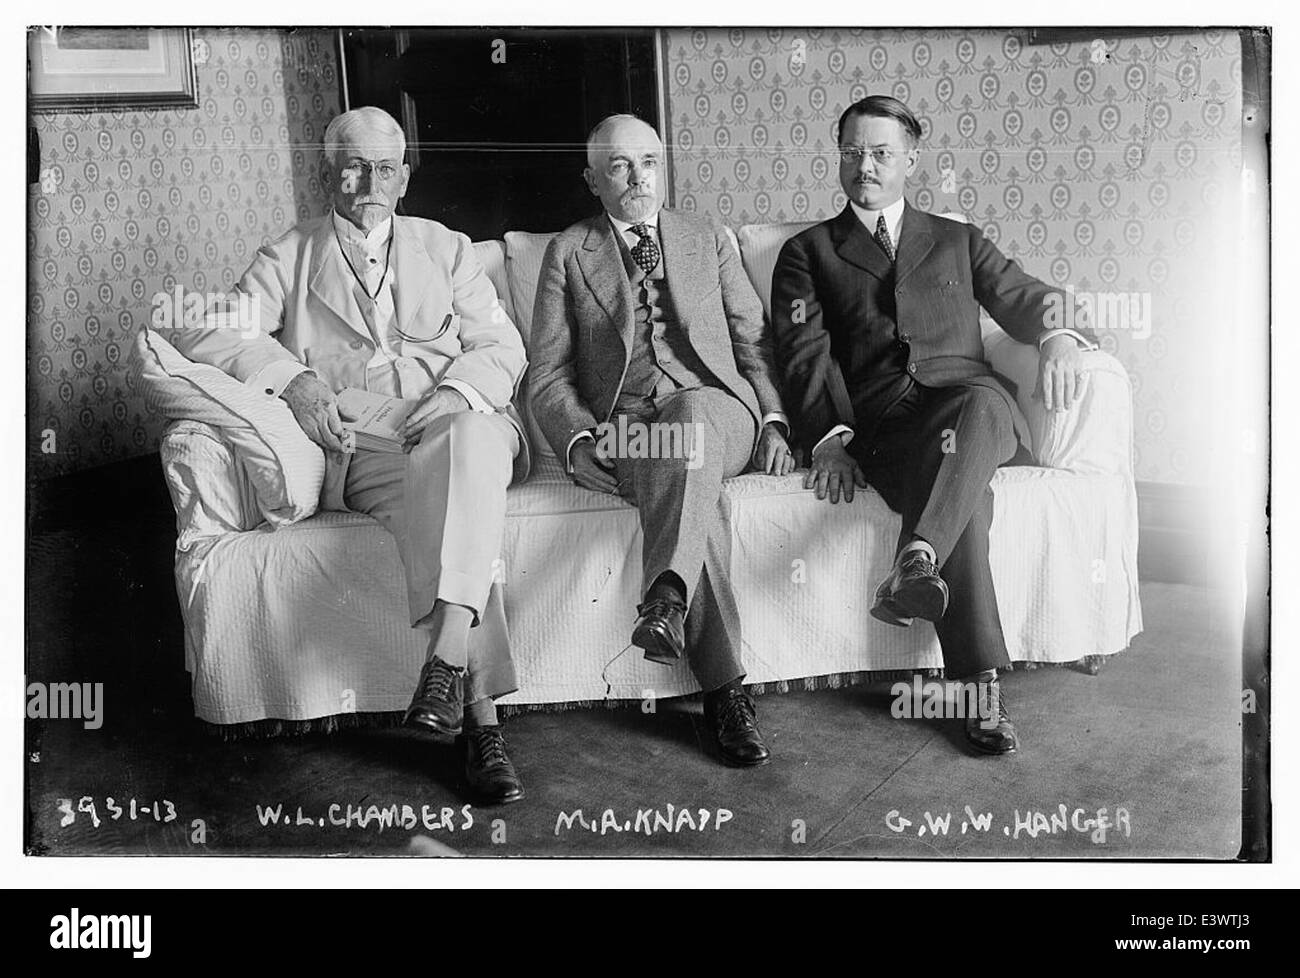 W.L. Chambers, M.A. Knapp, G.W.W. Hanger (LOC) Stock Photo